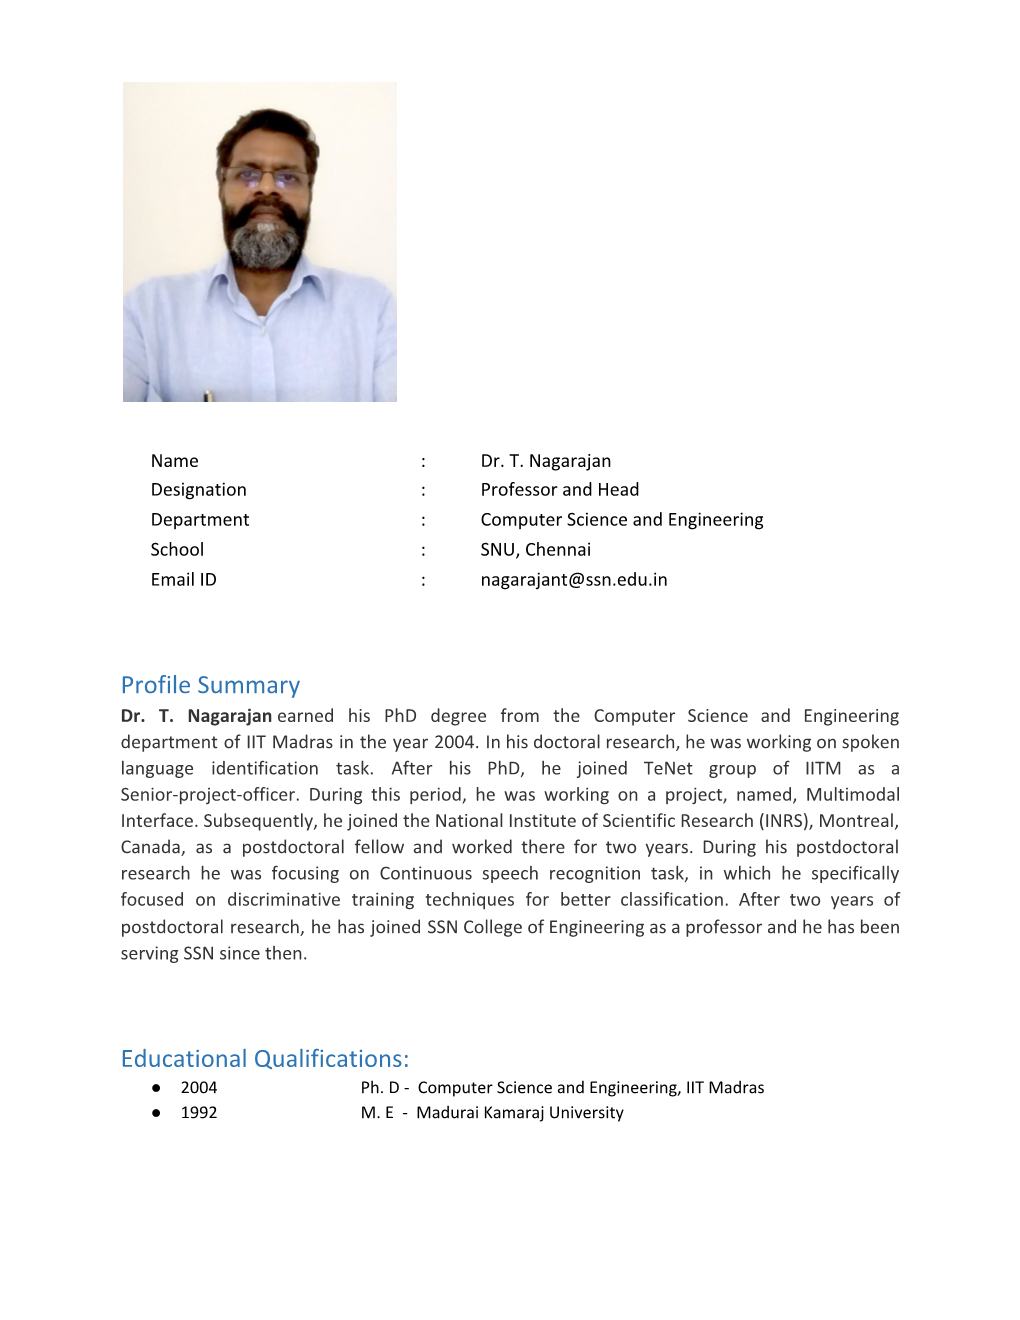 Dr. T. Nagarajan Designation : Professor and Head Department : Computer Science and Engineering School : SNU, Chennai Email ID : Nagarajant@Ssn.Edu.In